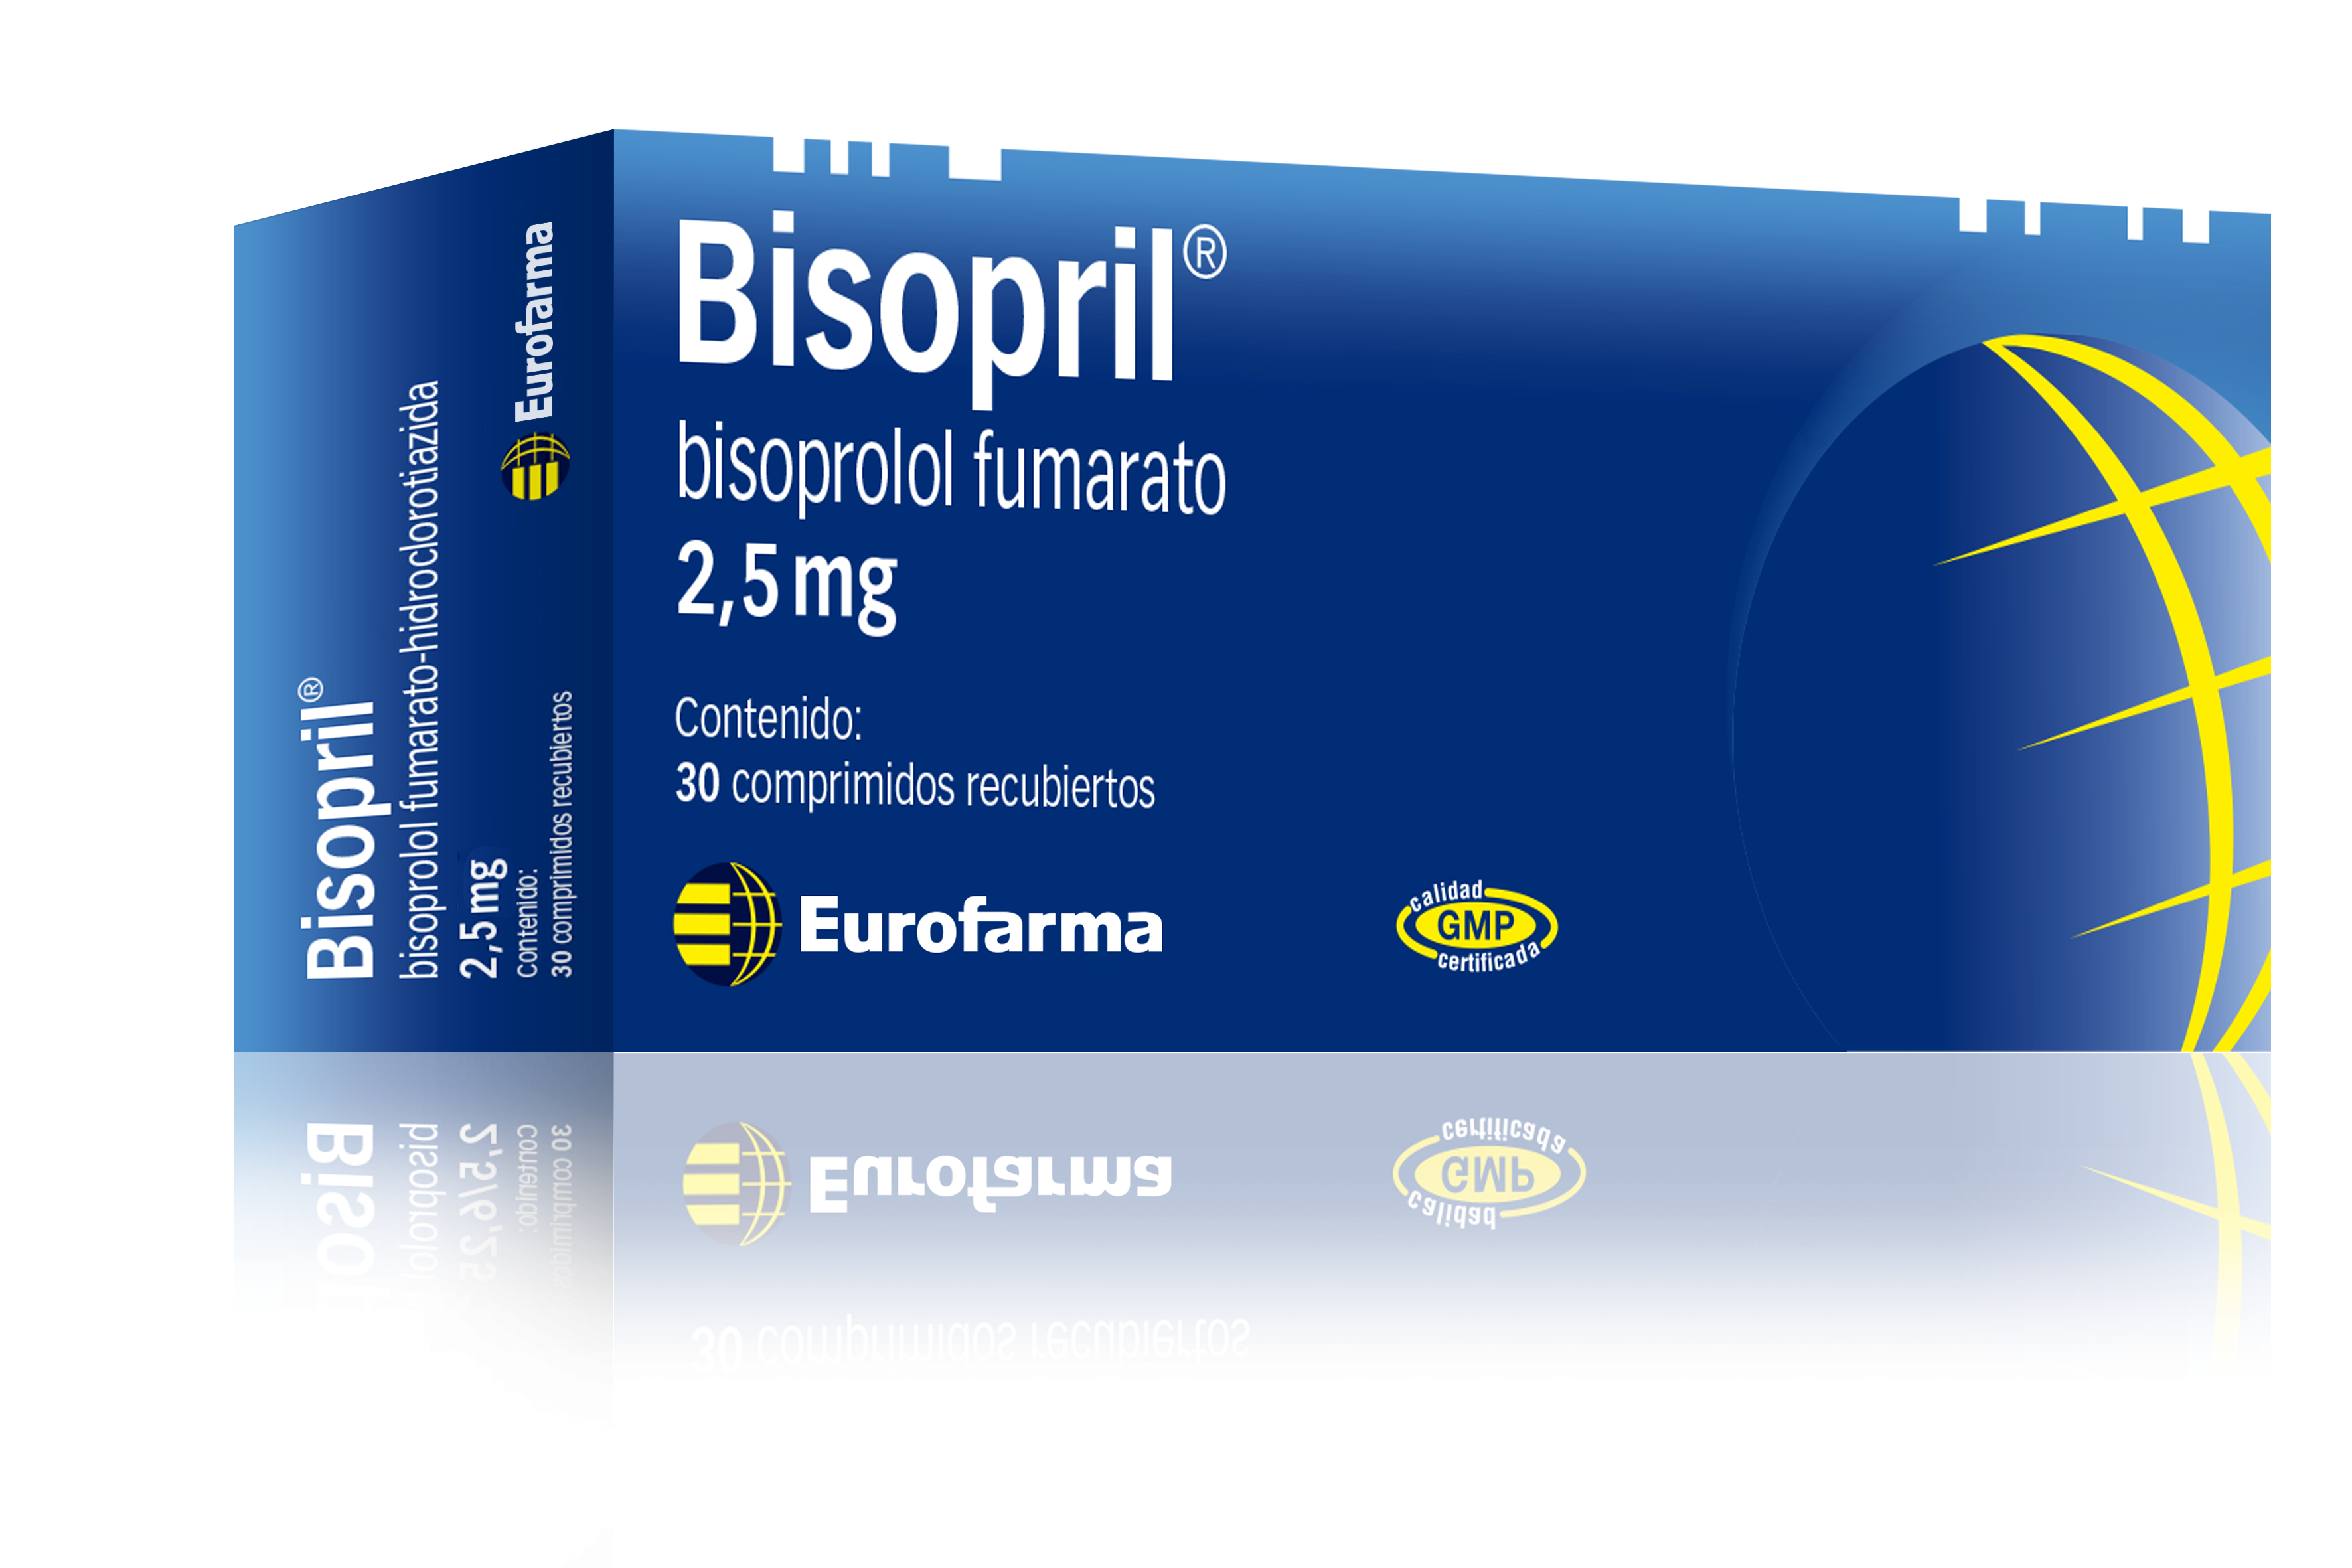 Bisopril 2,5 mg. (Bisoprolol Fumarato) comprimidos